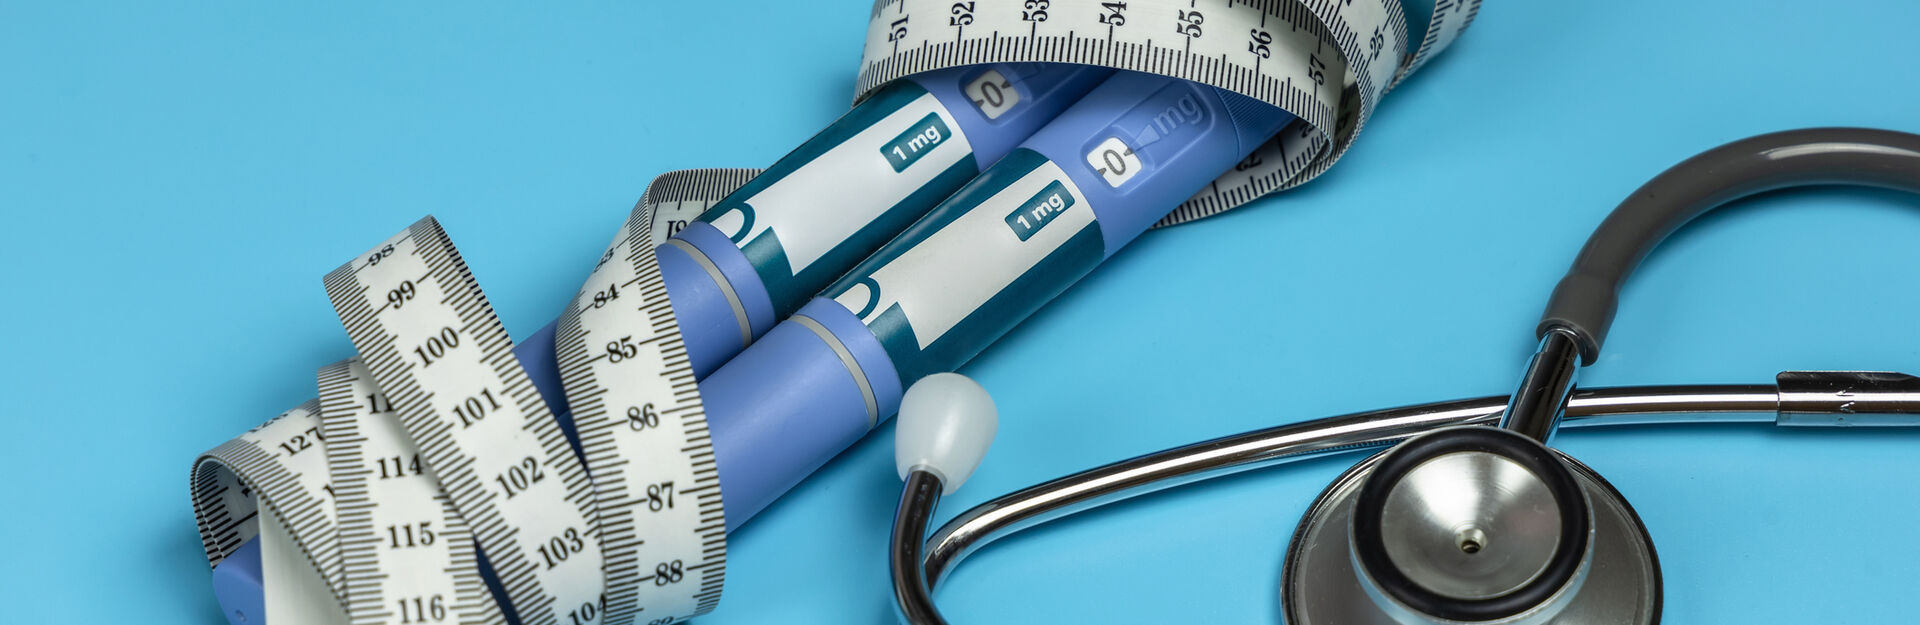 Ozempic Insulin injection pen or insulin cartridge pen for diabetics. Medical equipment for diabetes parients.